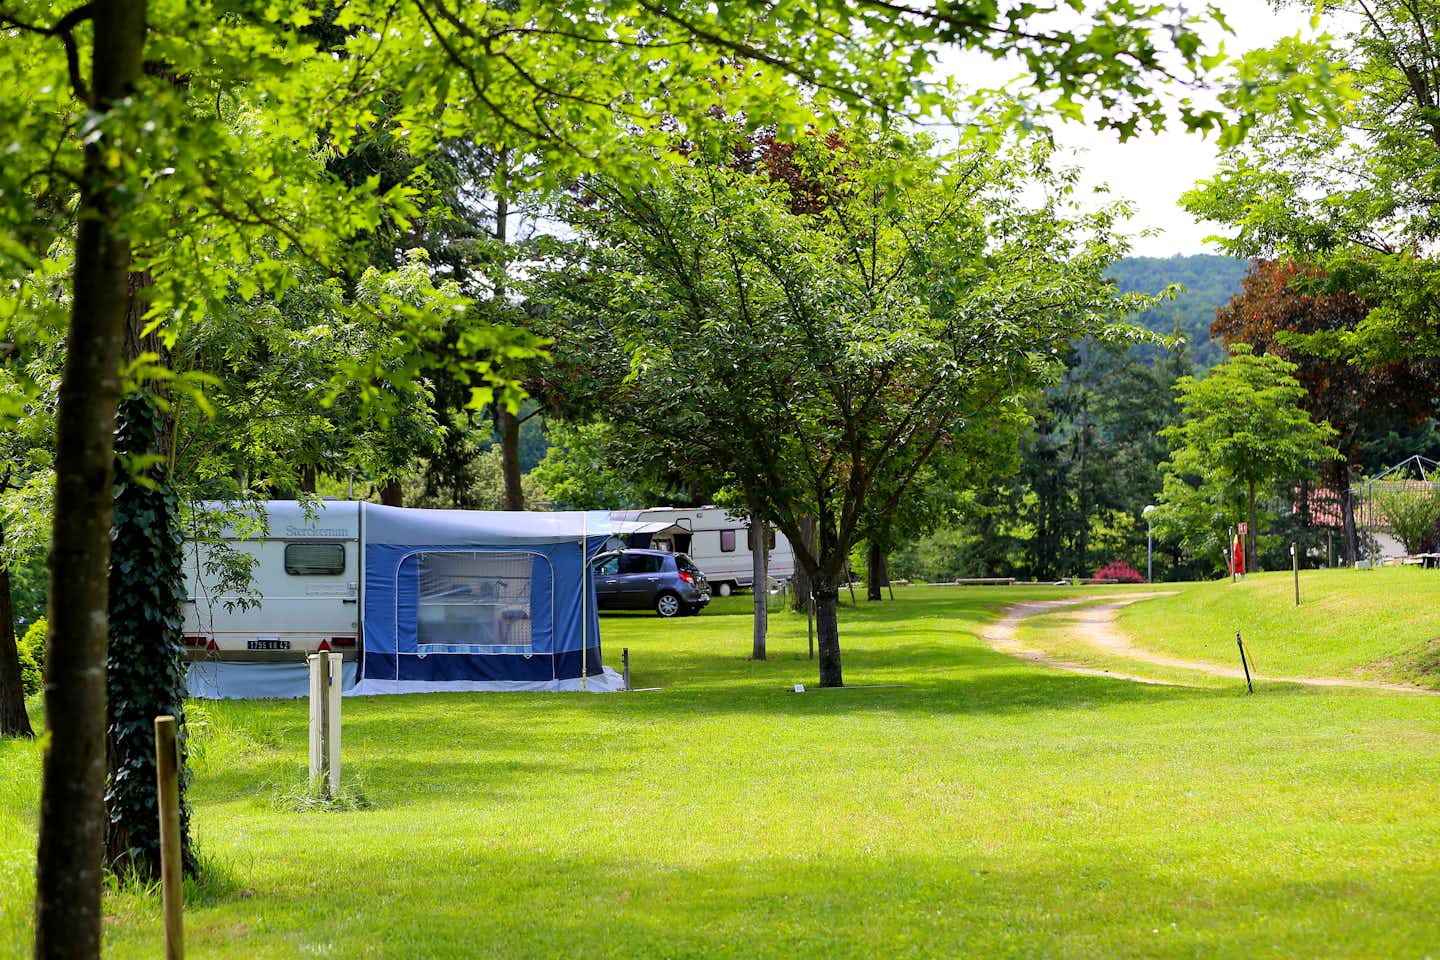 Camping de l’Orangerie - Stellplätze und Zeltplätze im Grünen auf dem Campingplatz